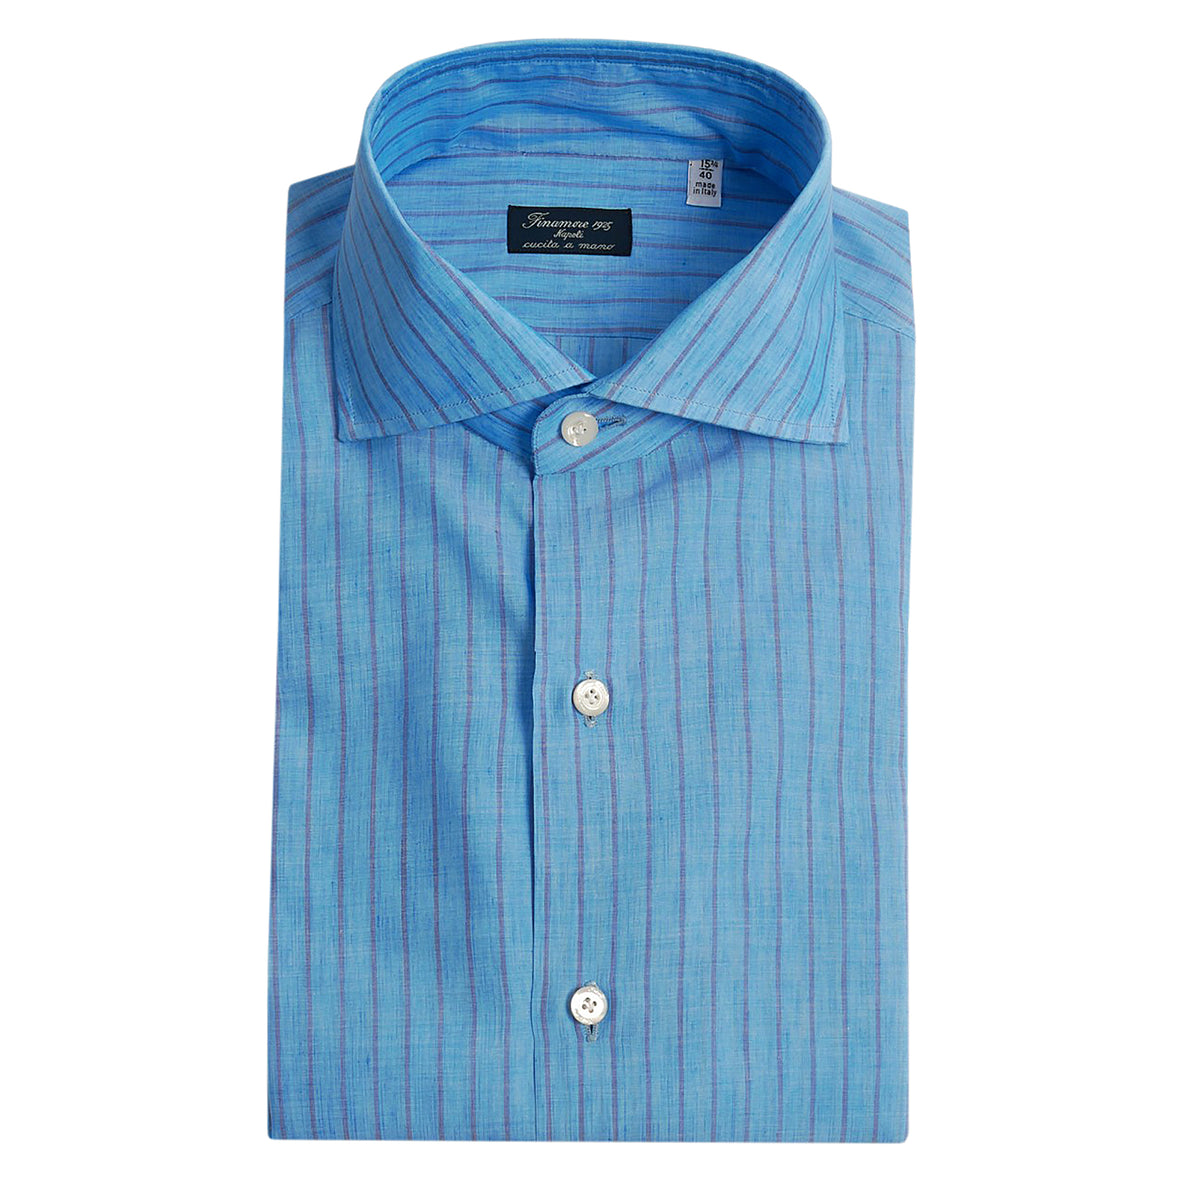 Dress shirt regular linen cotton turquoise stripes Napoli Finamore 1925